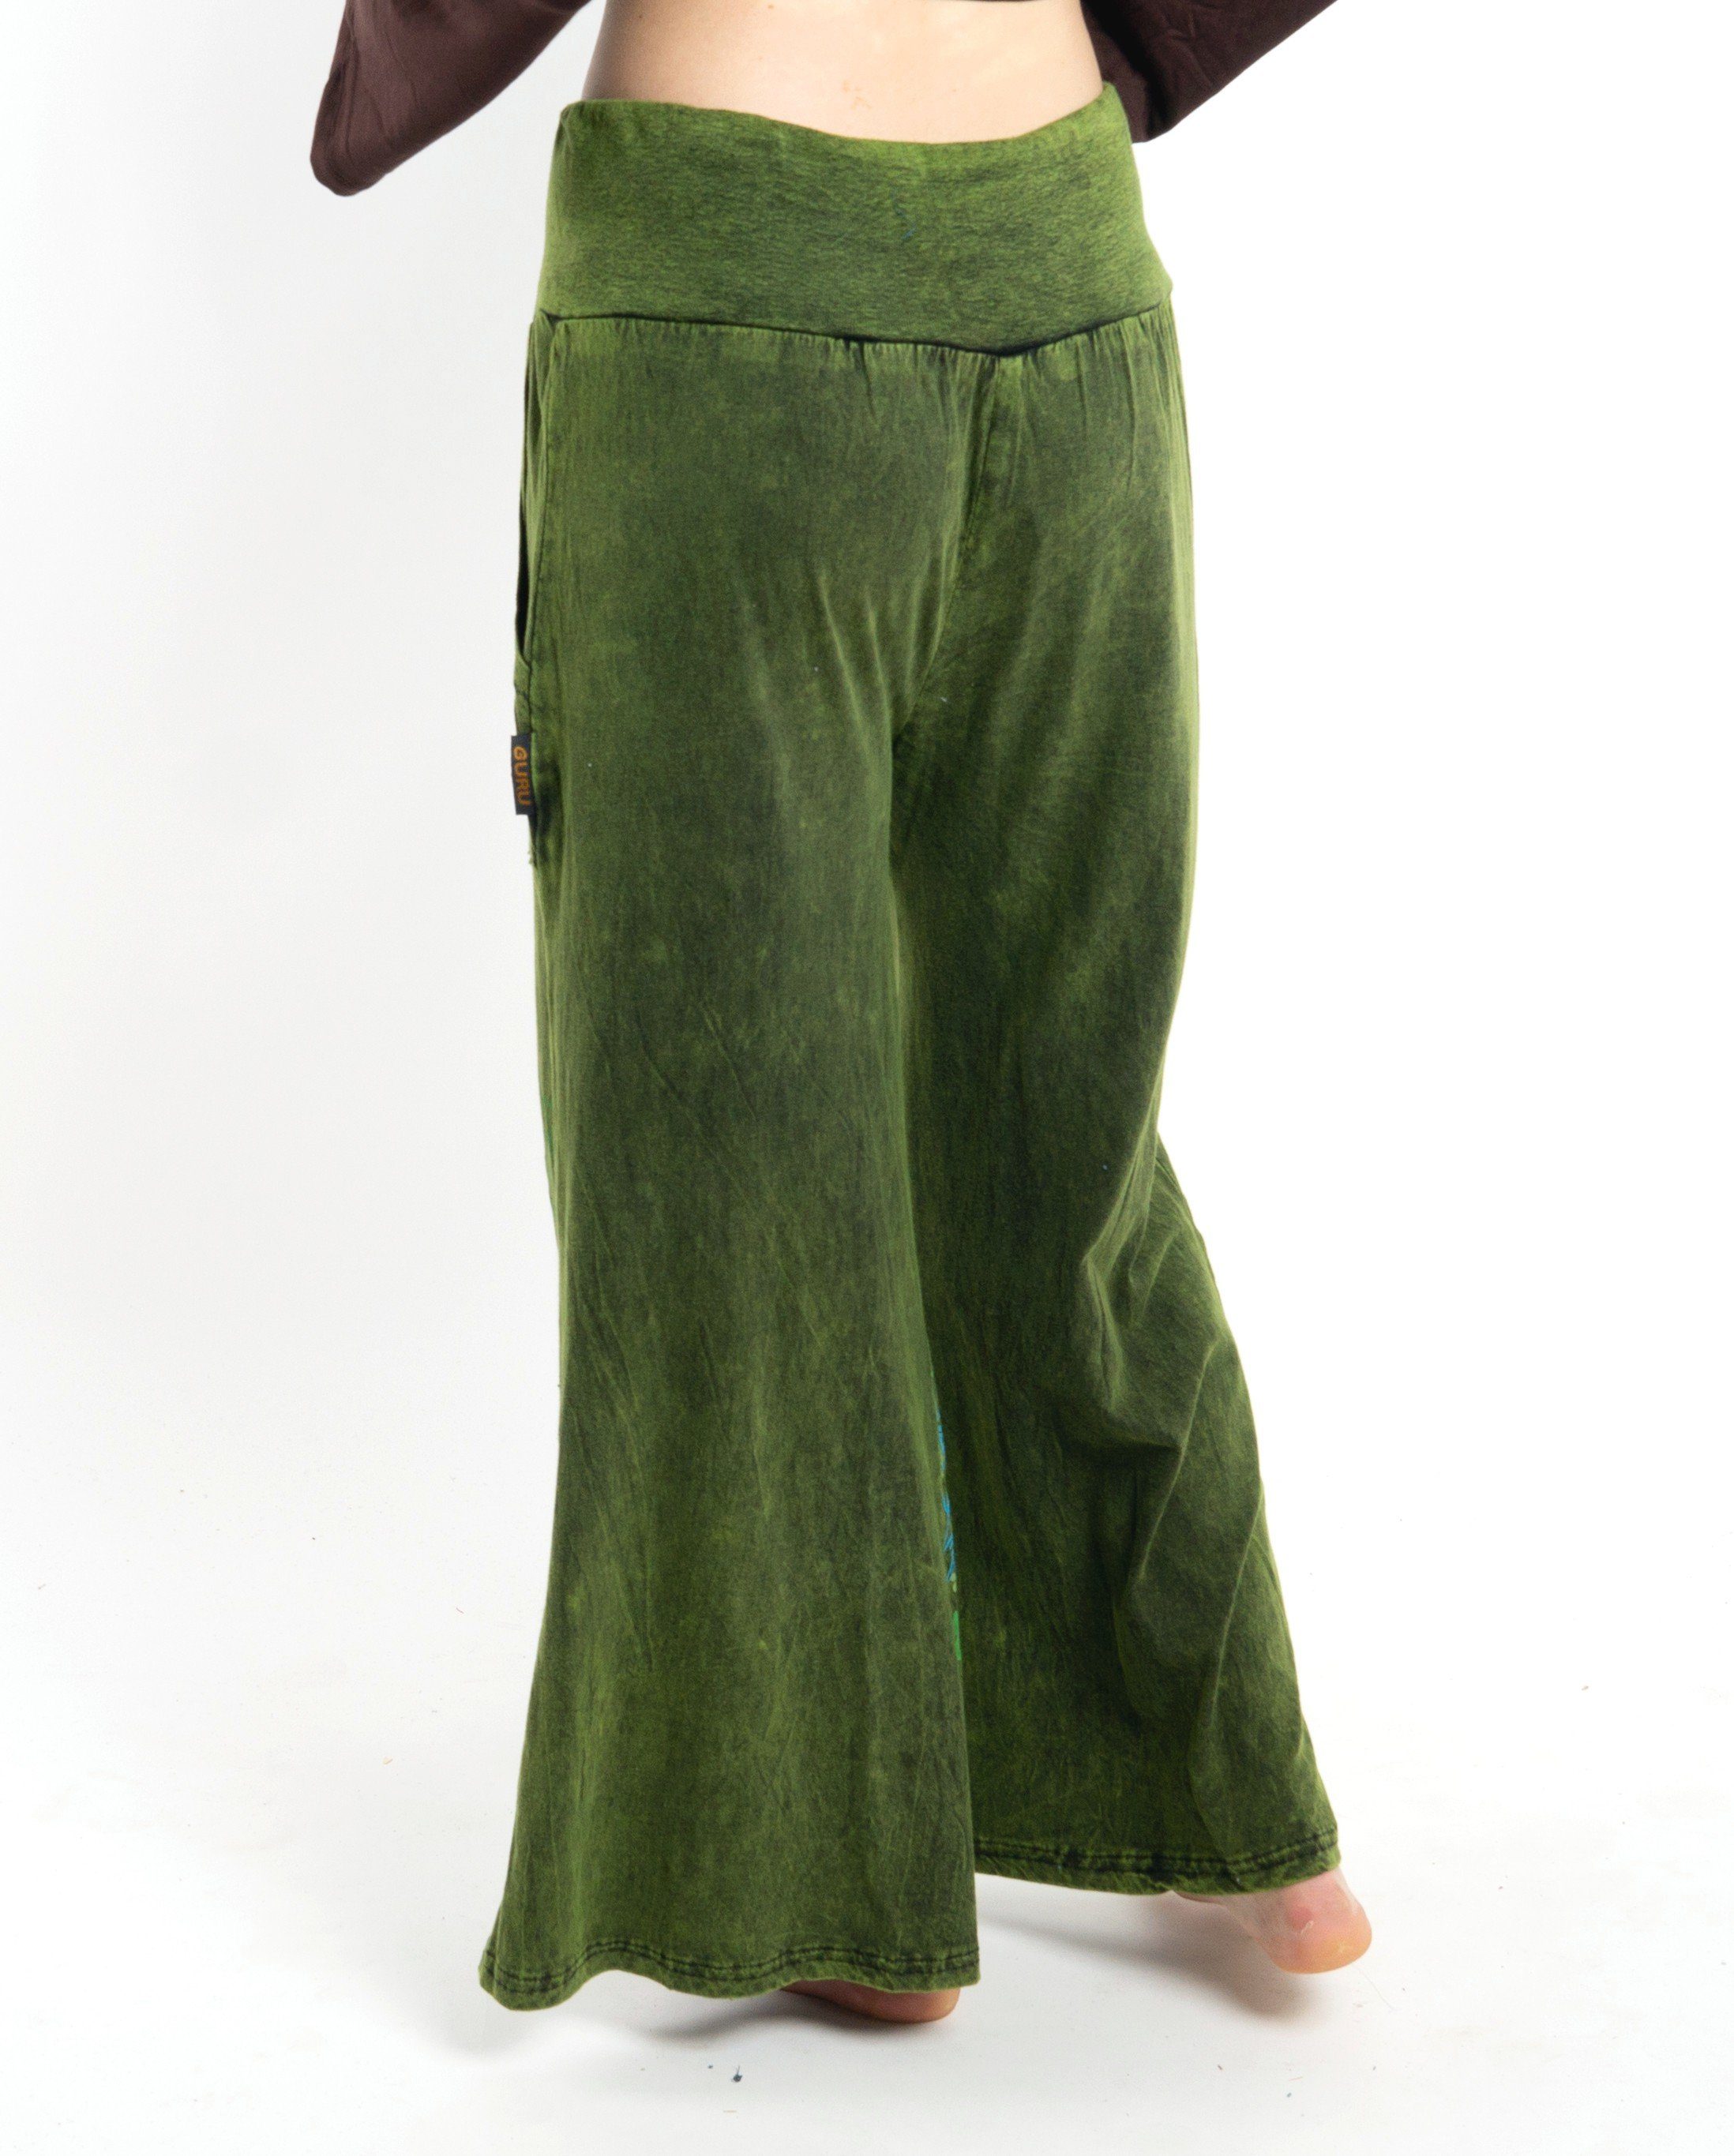 alternative grün Guru-Shop Bekleidung Baumwollhose, Boho mit.. Palazzohose, Relaxhose Hippiehose